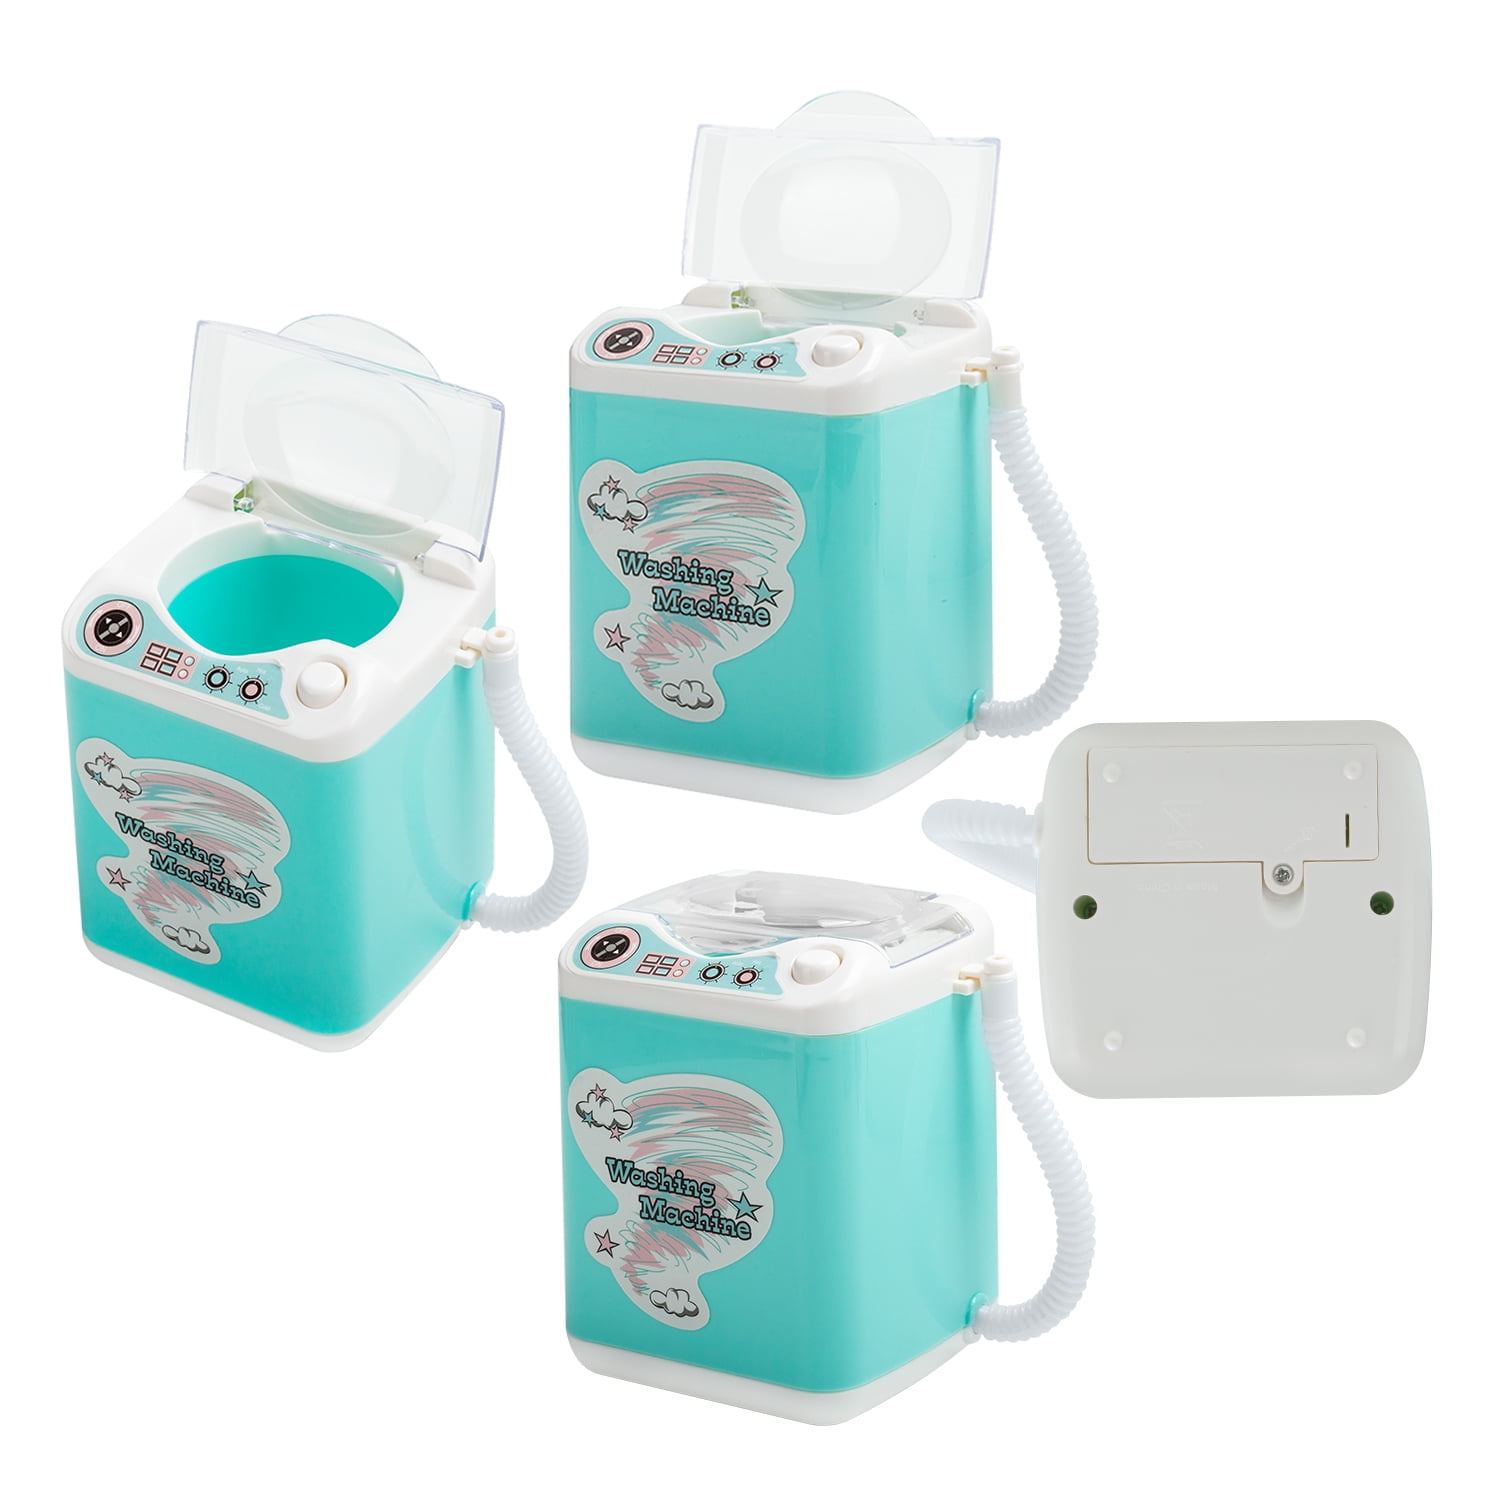 Mini Makeup Brush Cleaner Electric Washing Machine For Eyelashes Sponge Pad